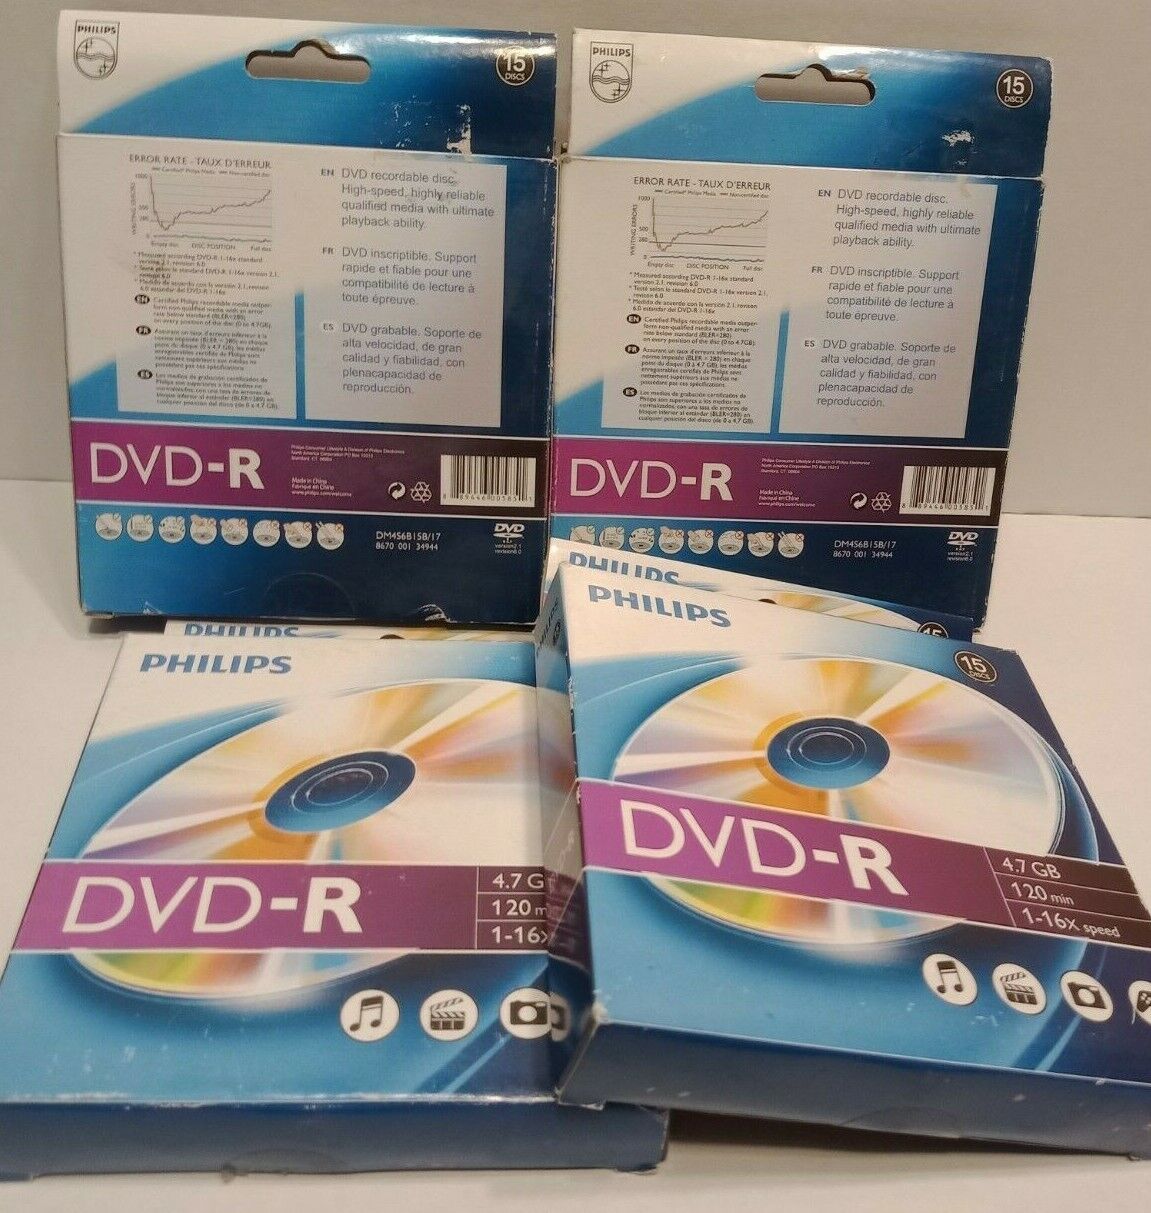 PHILIPS DVD-R 15 DISK 4.7 GB 120MIN 1-16x SPEED NEW IN BOX